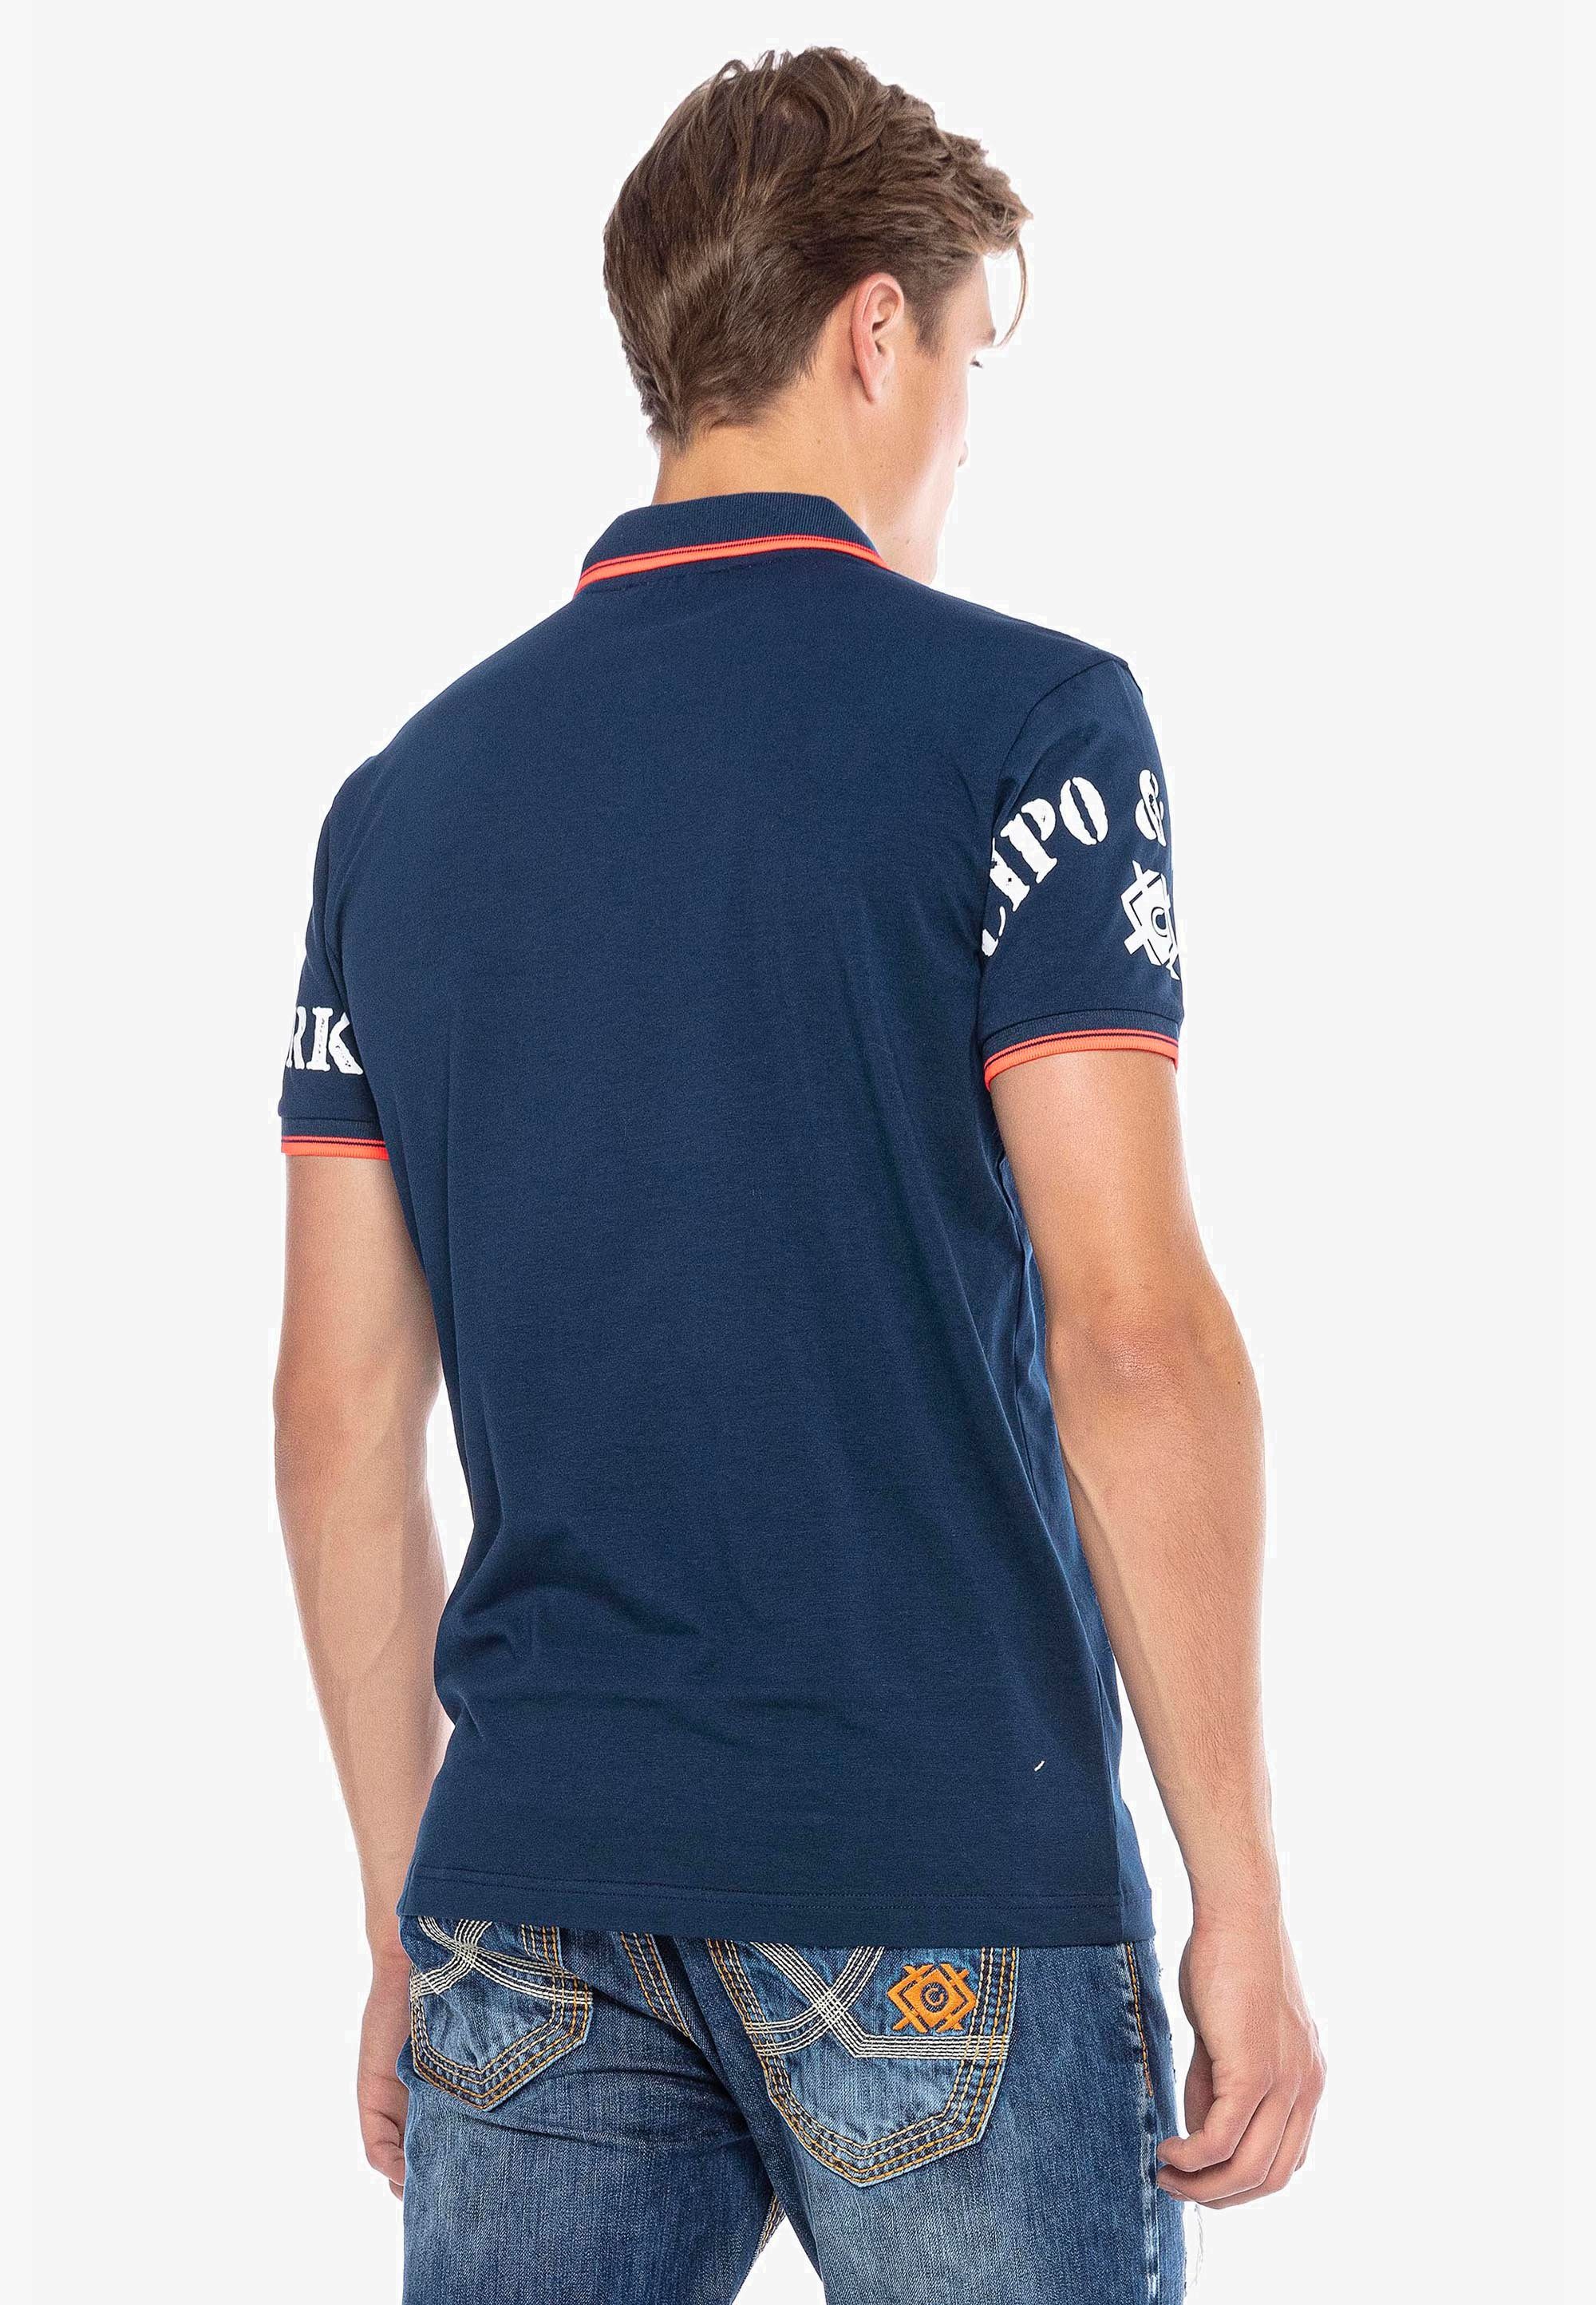 Cipo & Baxx mit Print dunkelblau trendigem Poloshirt